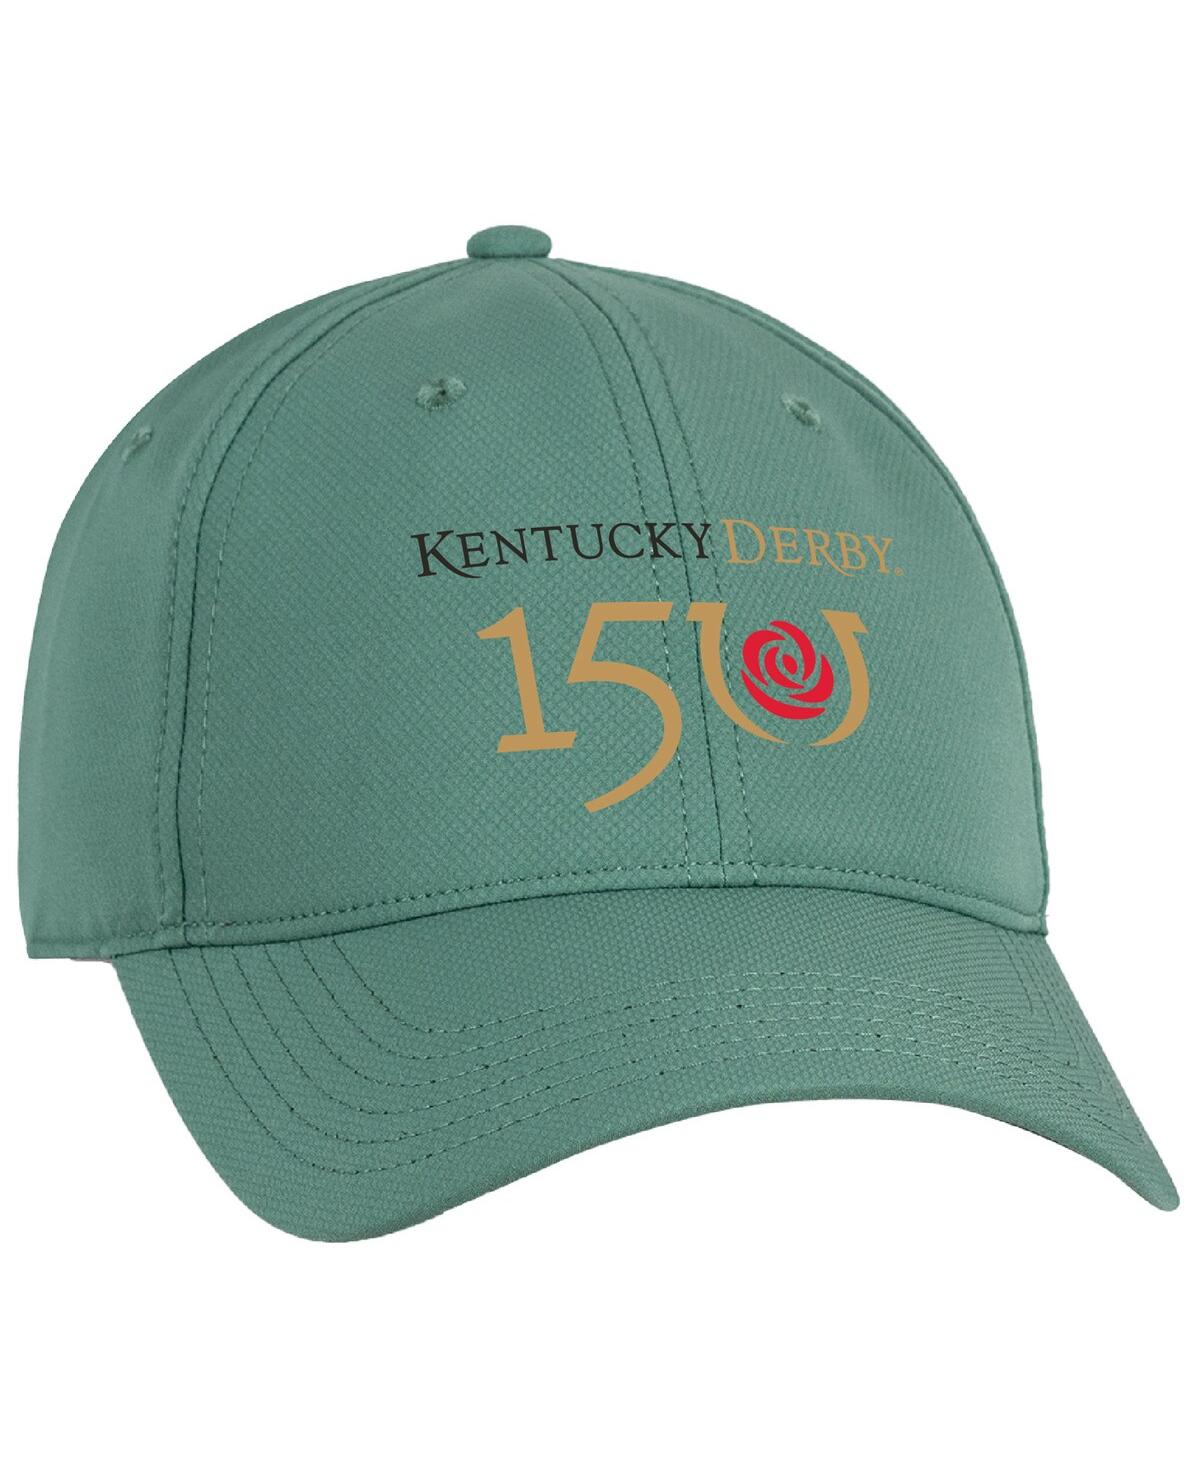 Men's Ahead Green Kentucky Derby 150 Frio Adjustable Hat - Green